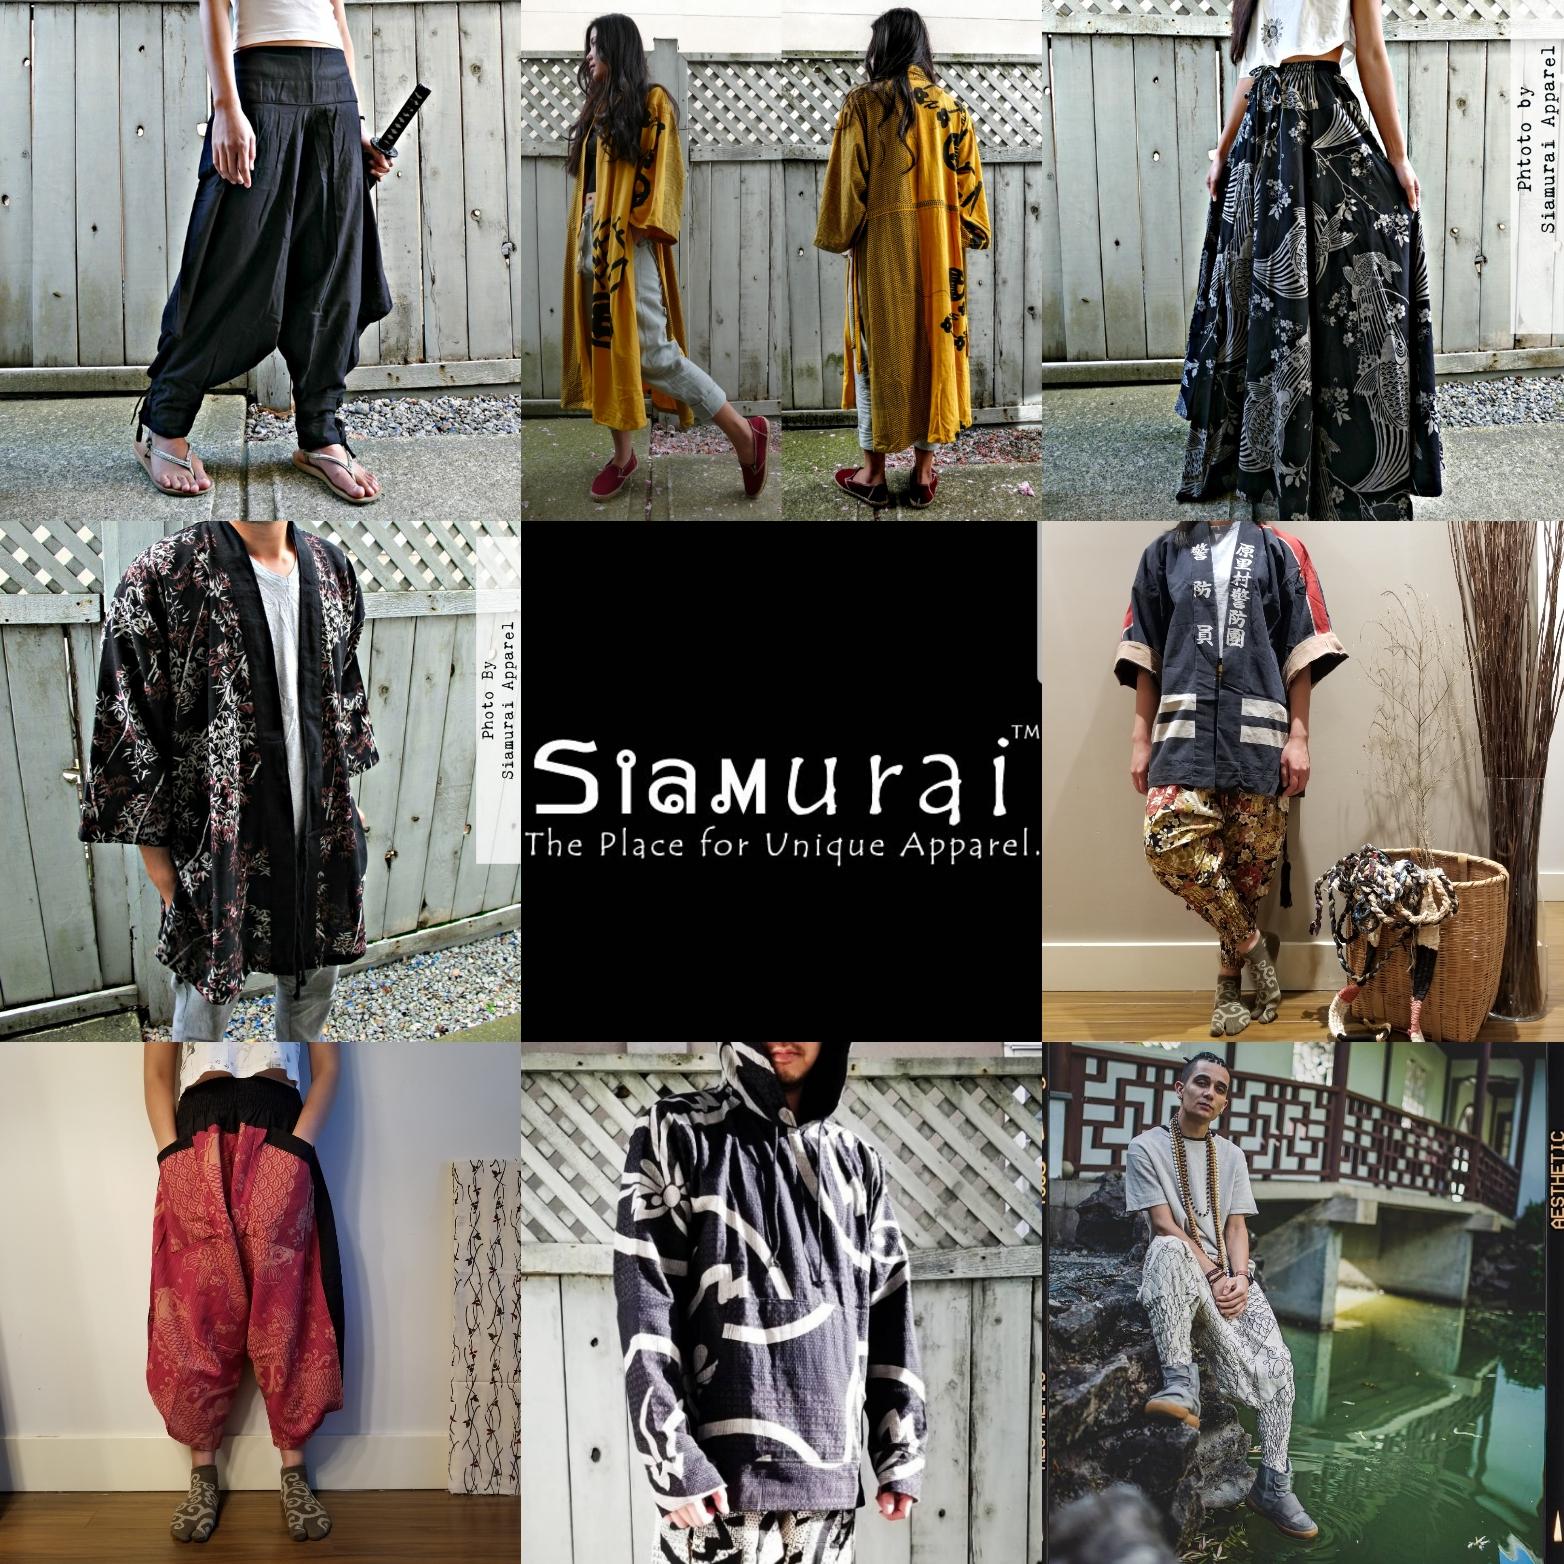 https://www.downtownsquamish.com/wp-content/uploads/2022/03/siamurai-apparel-1.jpg